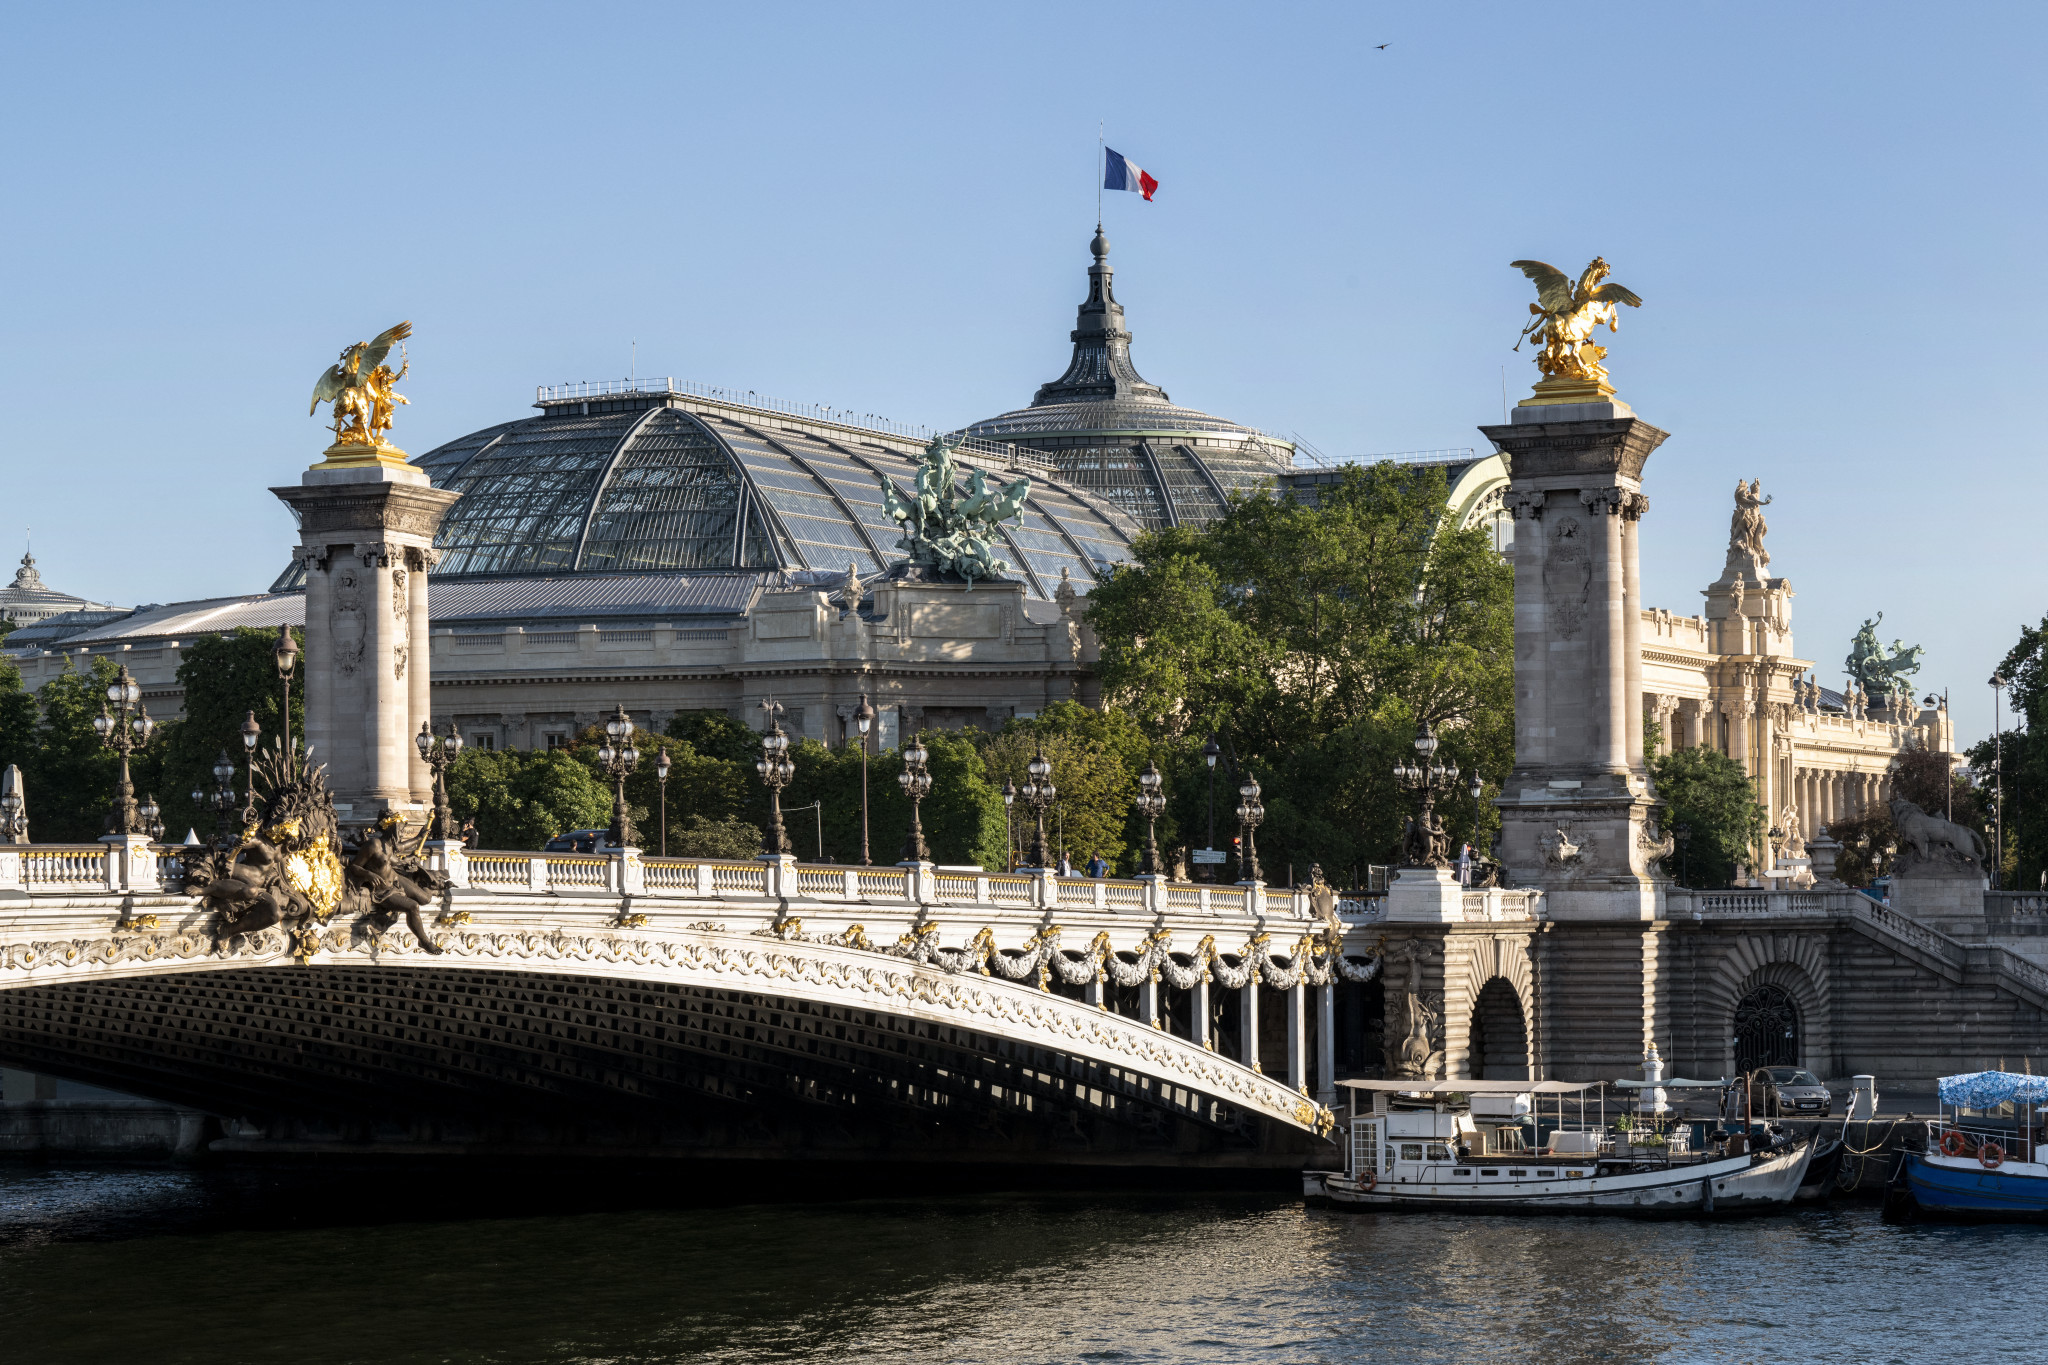 Paris 2024 Chefs de Mission have taken a tour of the Olympic sites including Grand Palais ©Getty Images